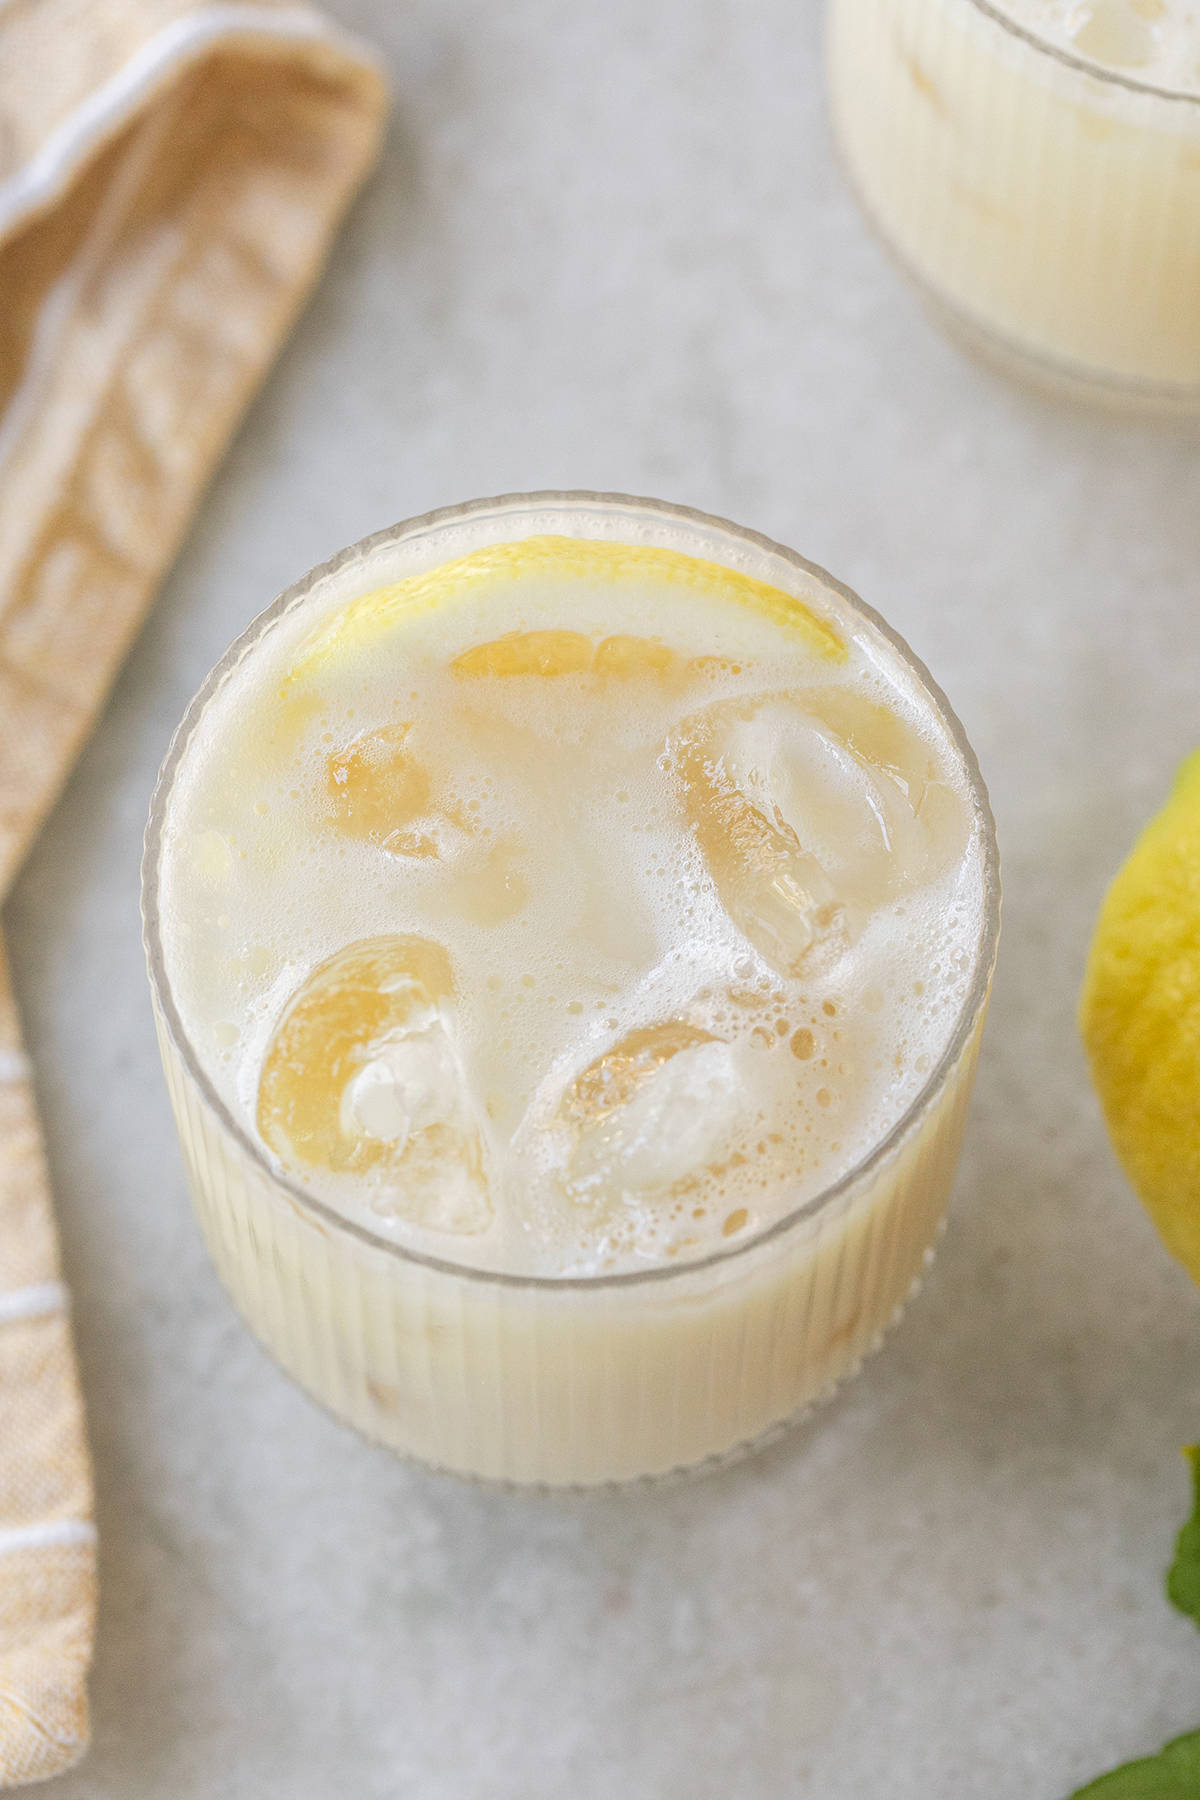 Creamy lemonade with lemon slice.